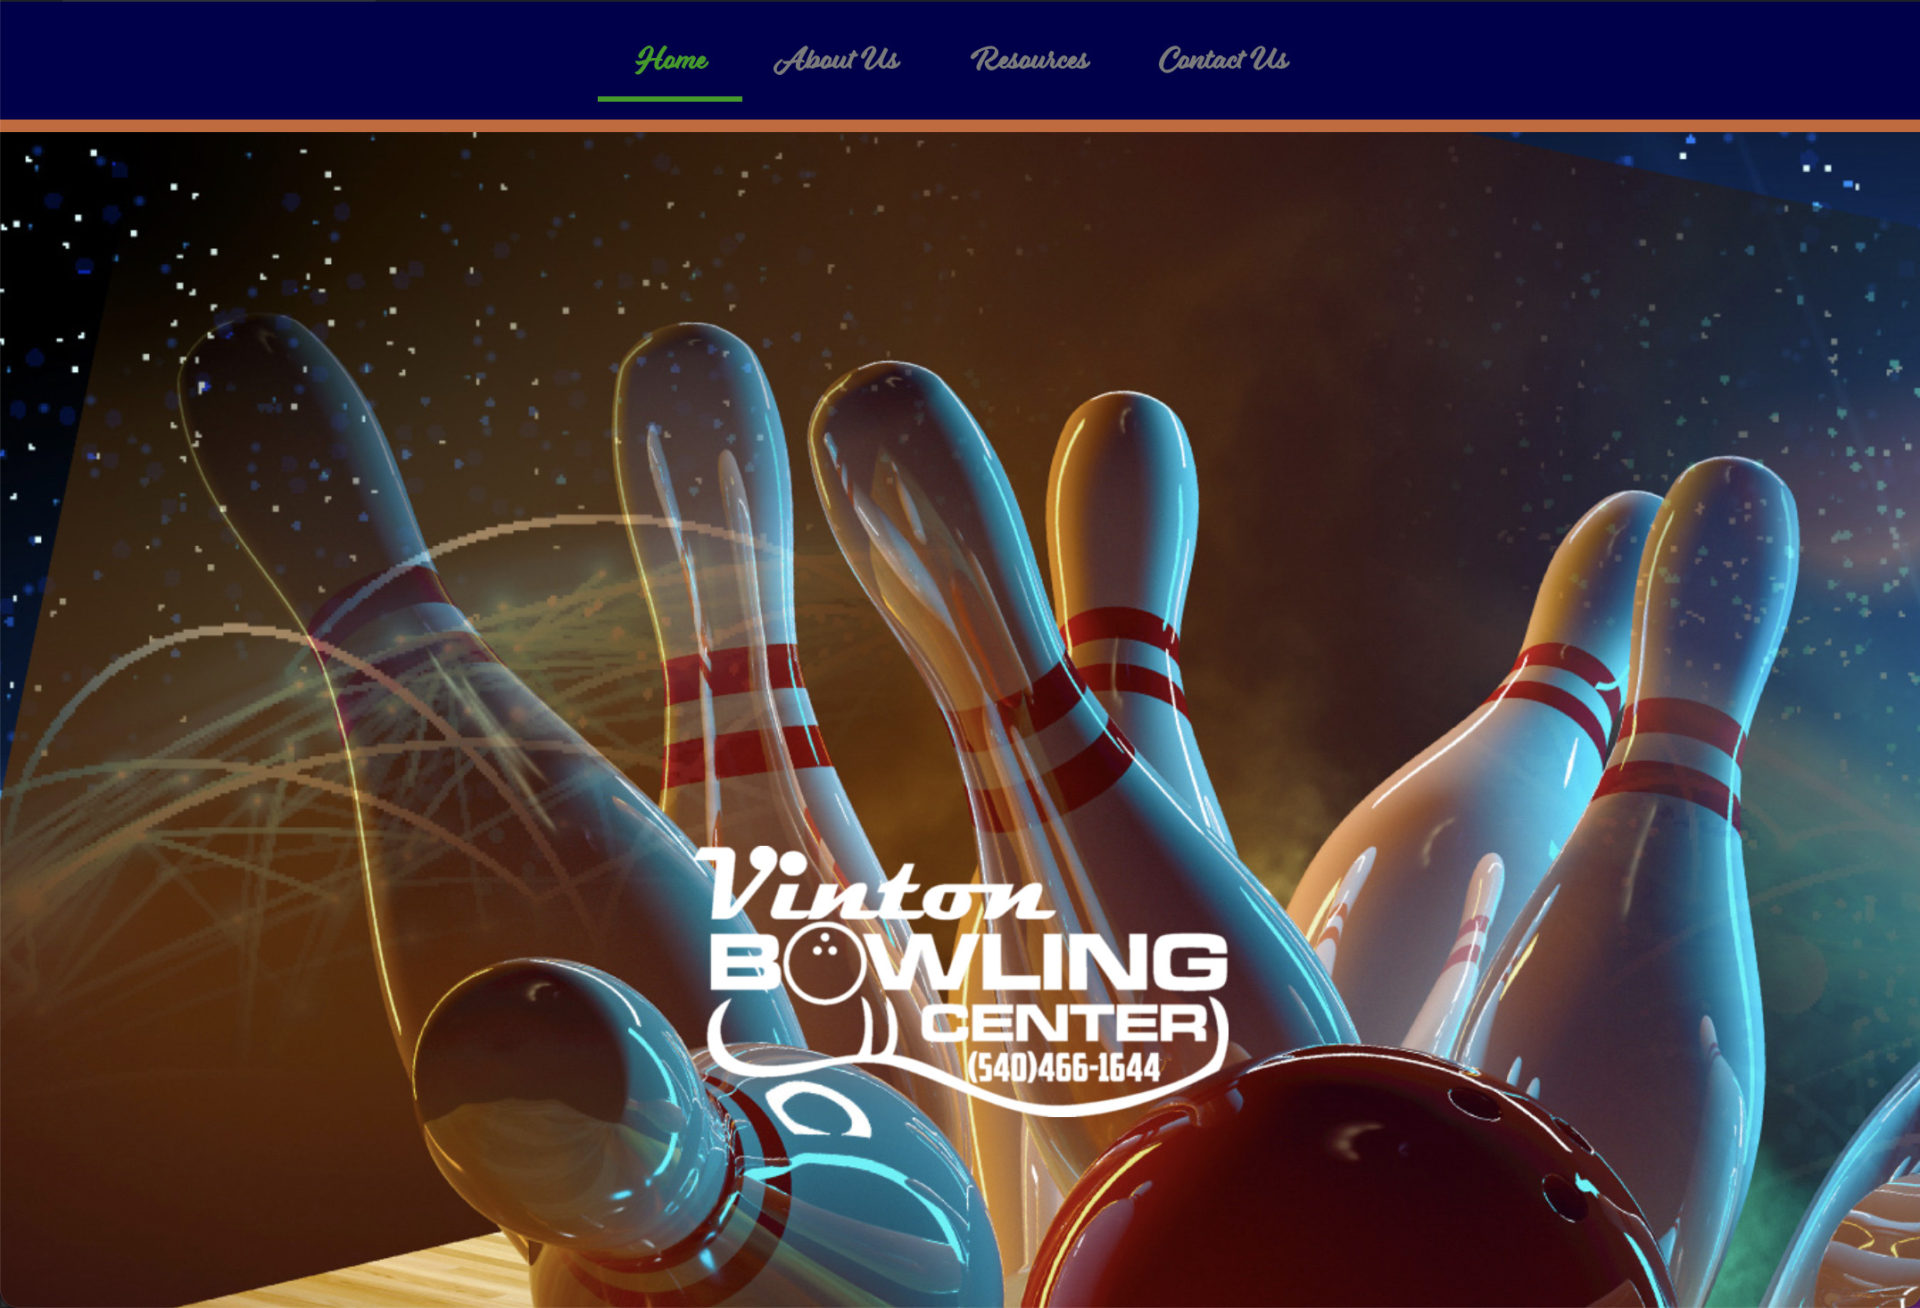 Vinton bowling center